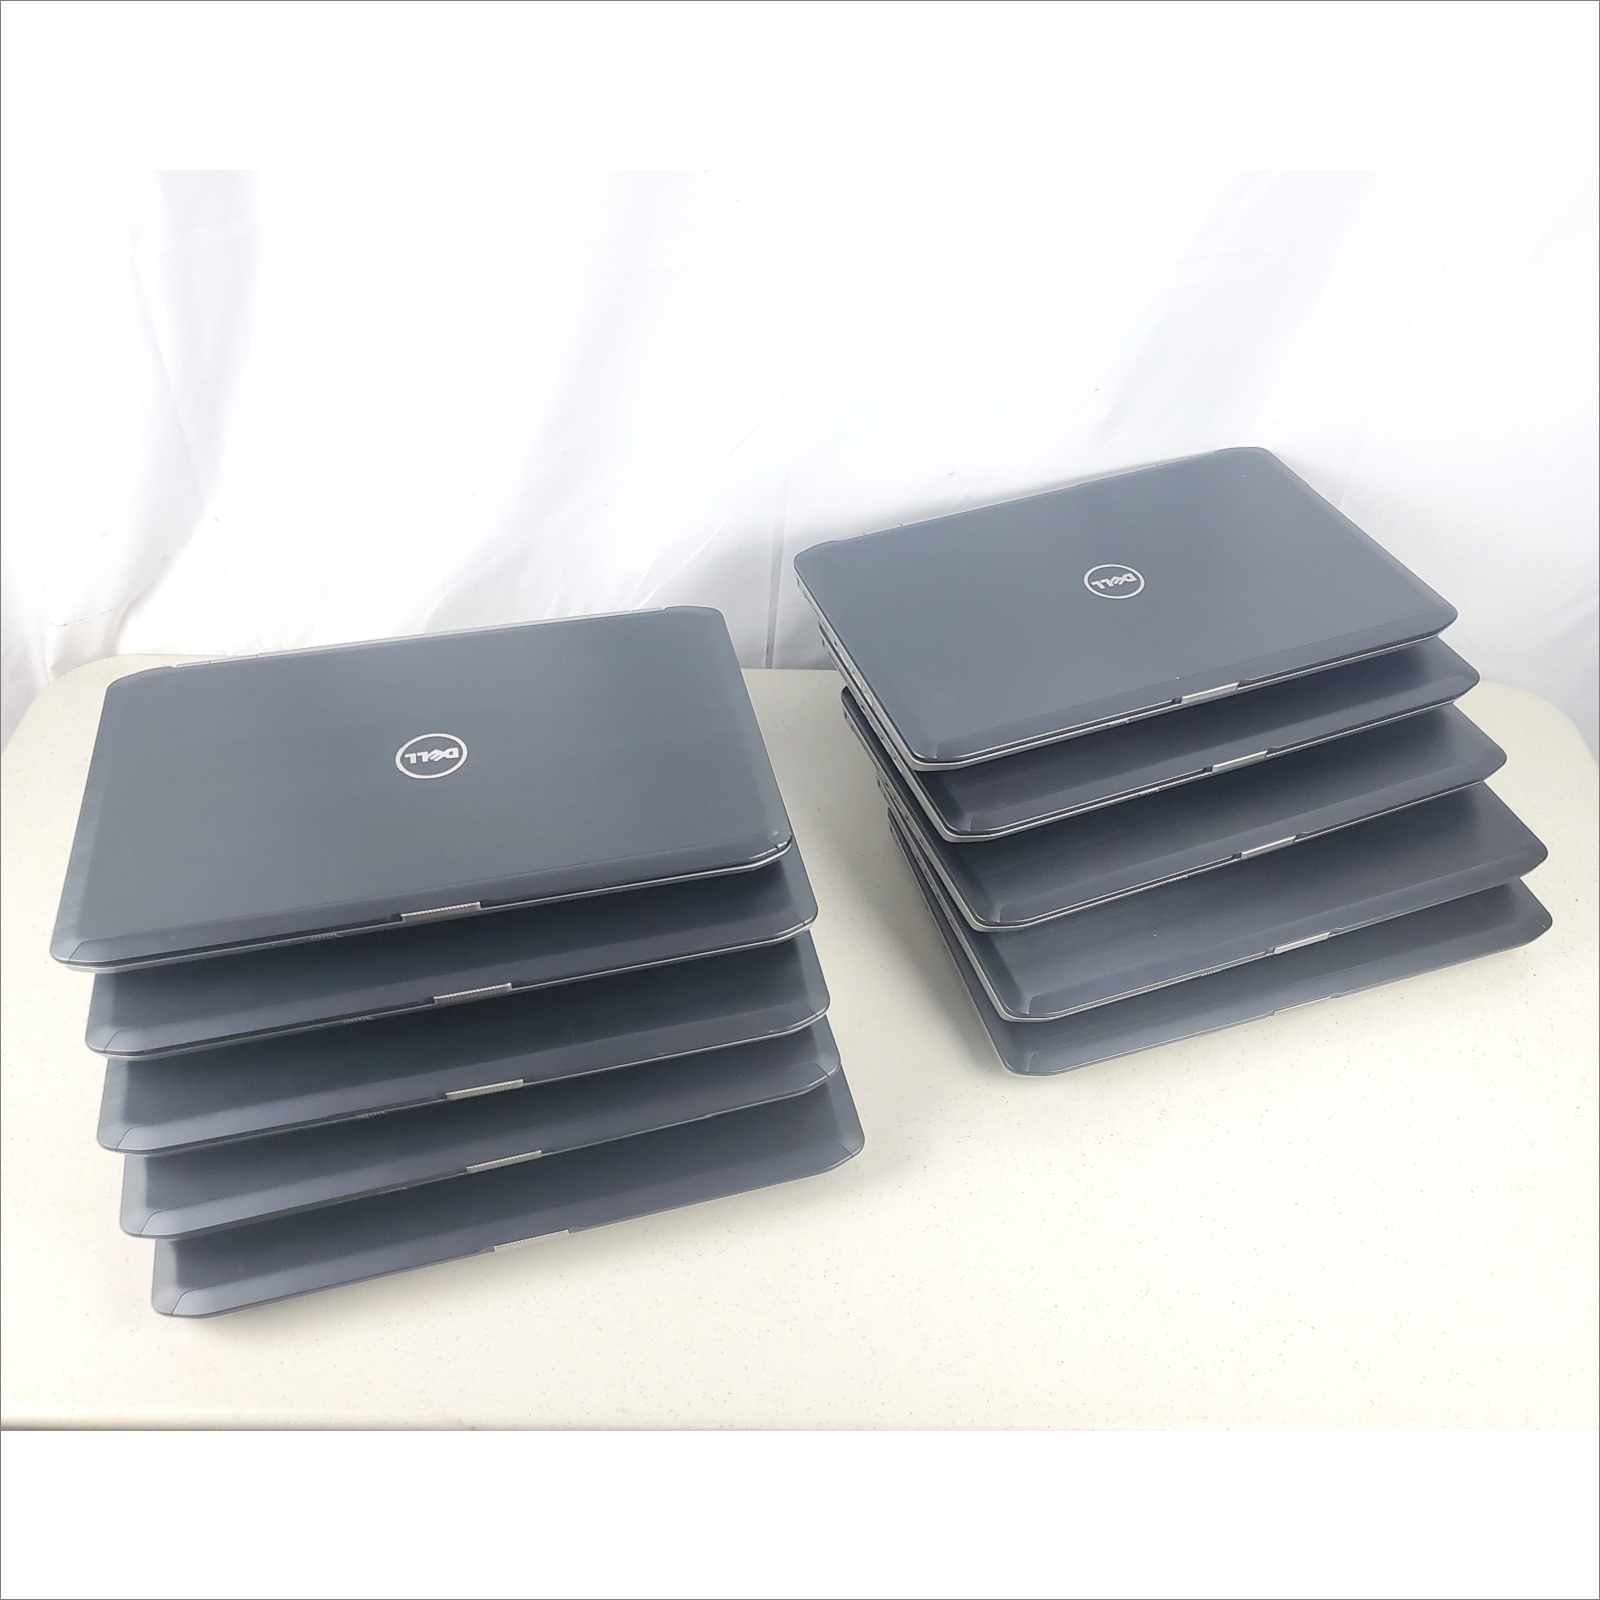 Dell Latitude E5520 Business Laptop 15.6 4GB RAM intel i5-2540M